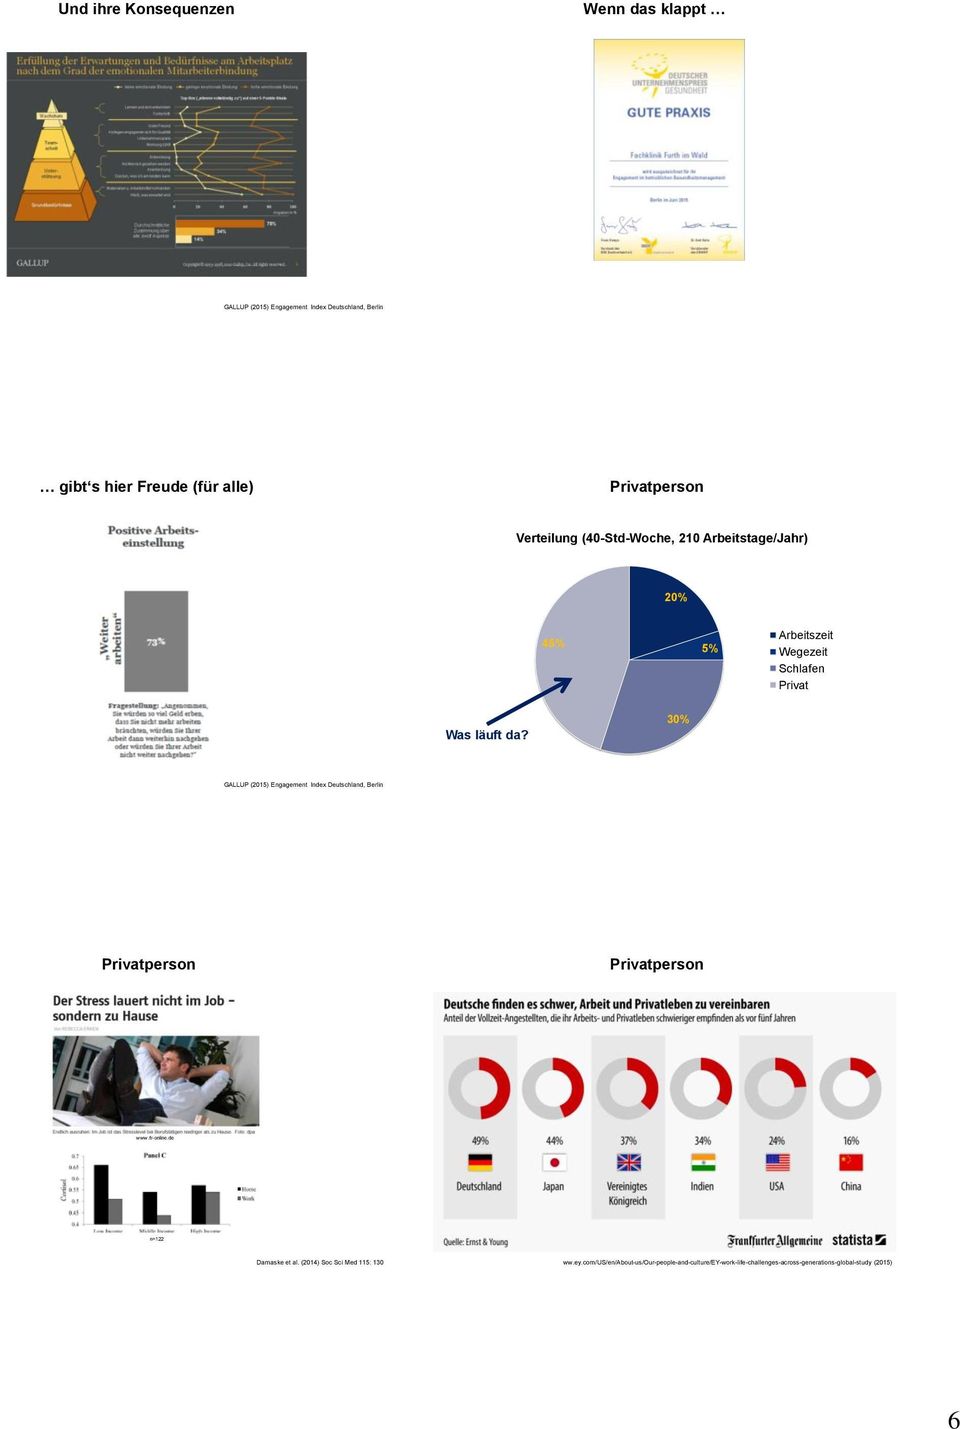 30% GALLUP (2015) Engagement Index Deutschland, Berlin Privatperson Privatperson www.fr-online.de n=122 Damaske et al.